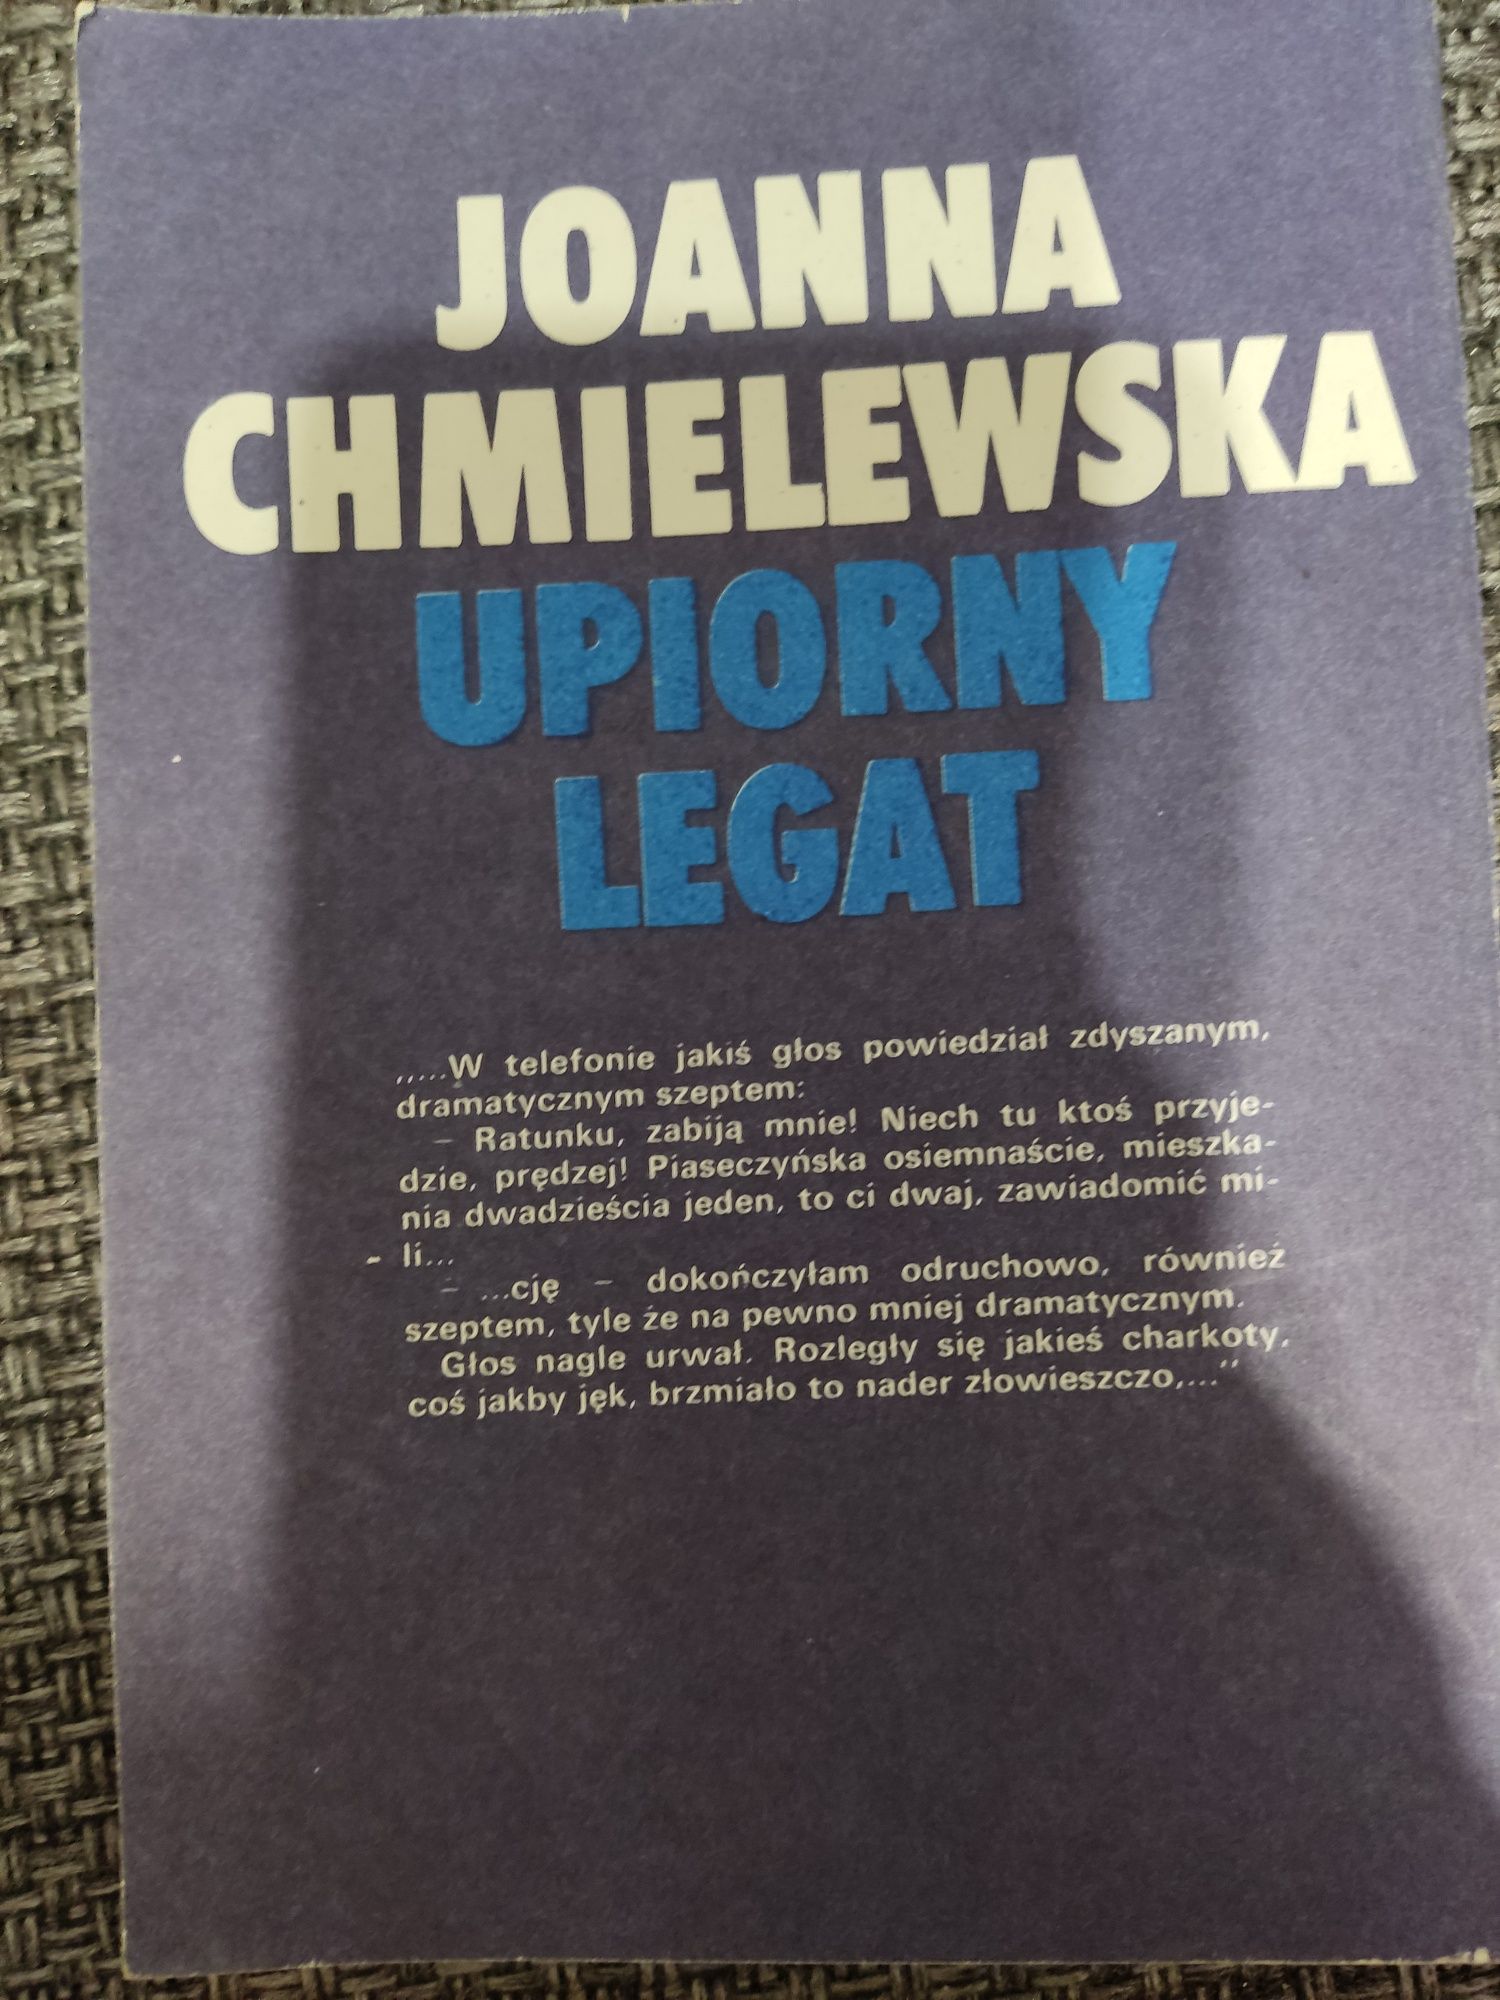 Upiorny legat Joanna Chmielewska